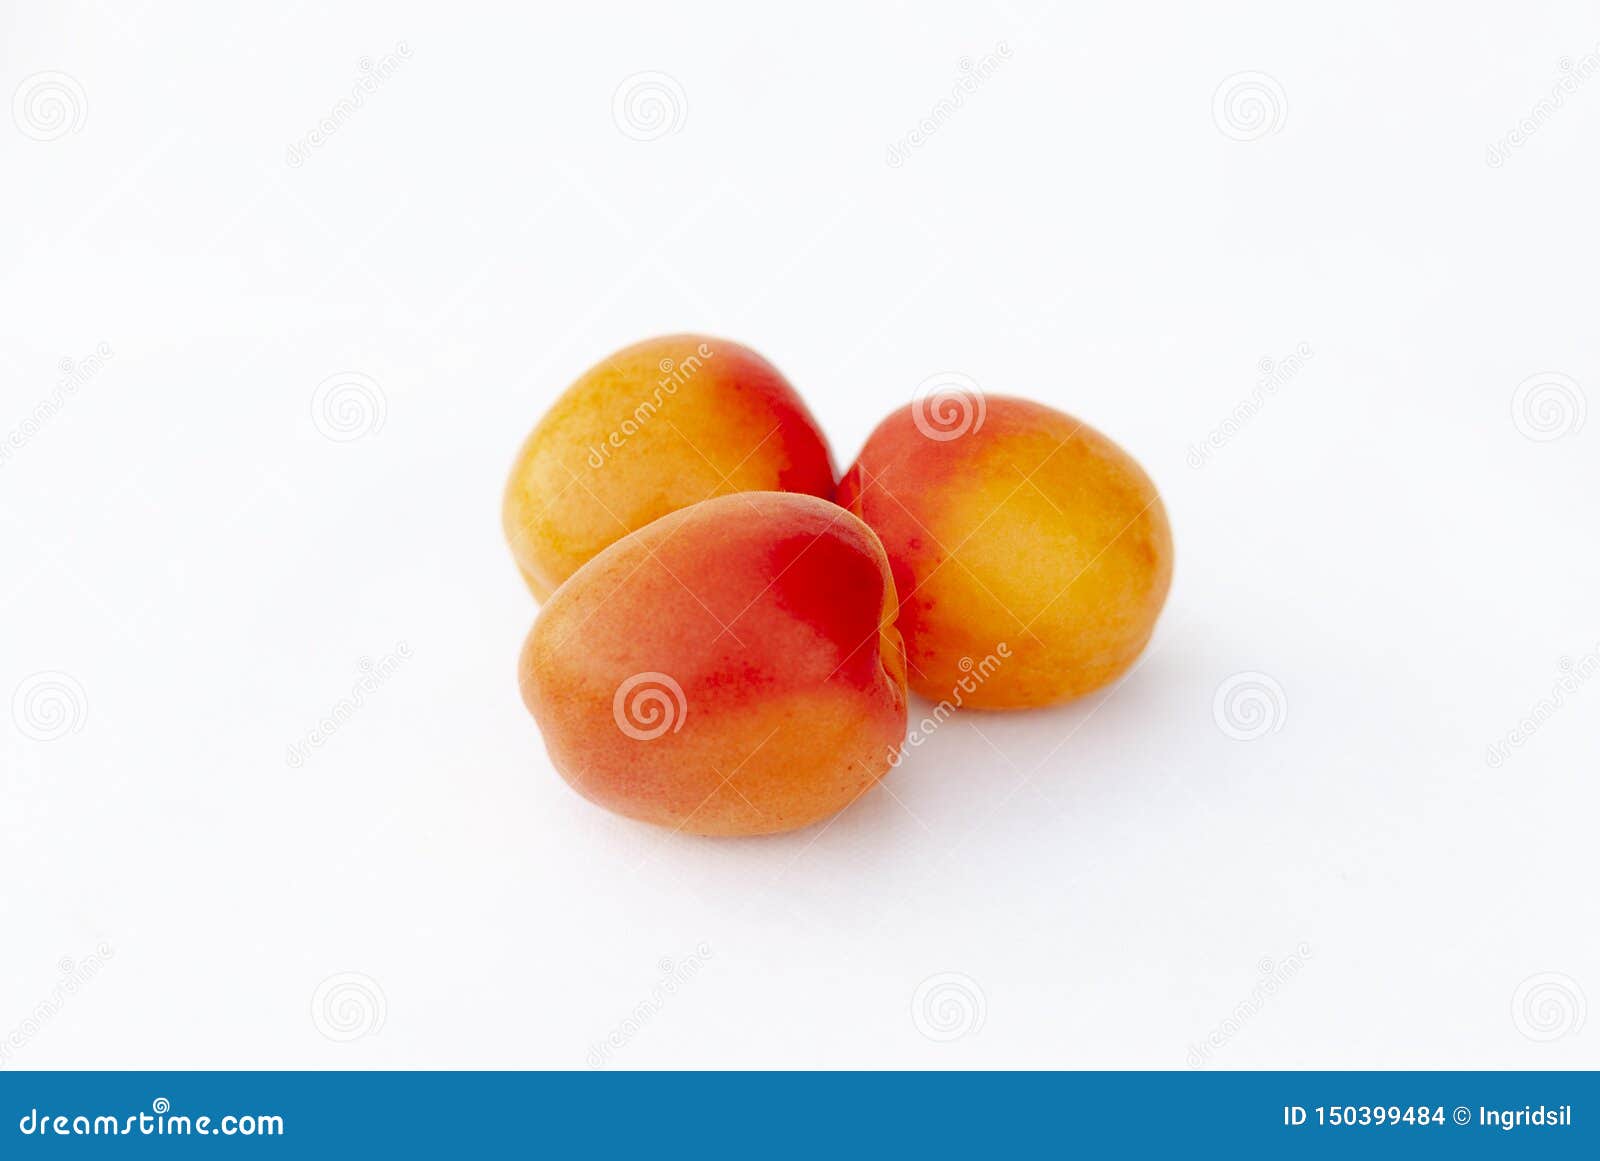 fresh organic apricot on white background. three apricots